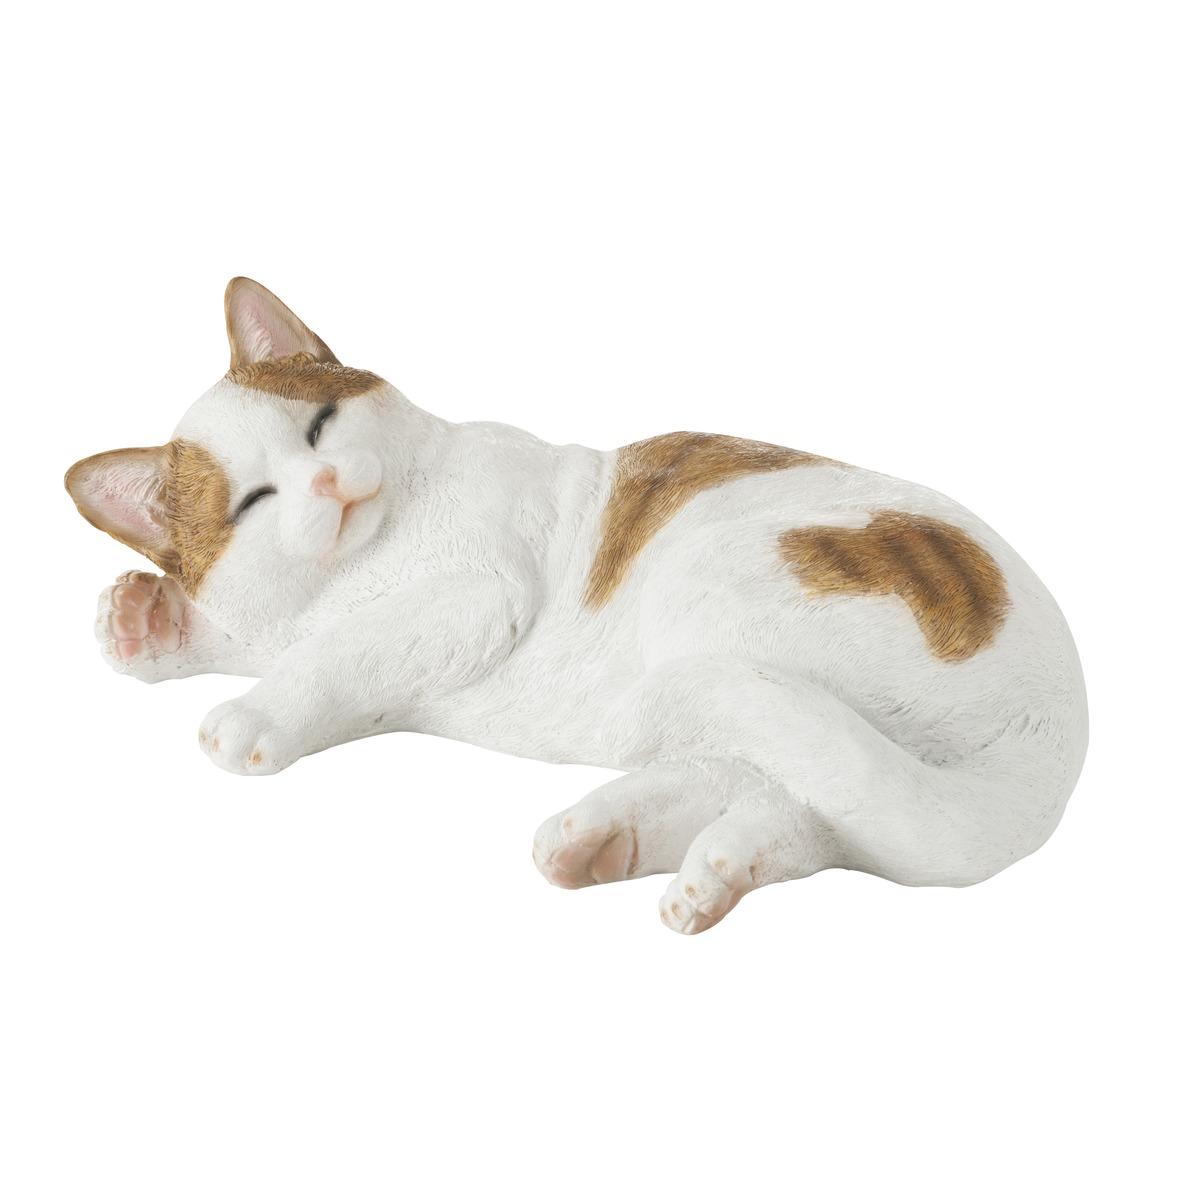 Figurine chaton - 36 x 24,5 x 13,5 cm - Blanc, Marron